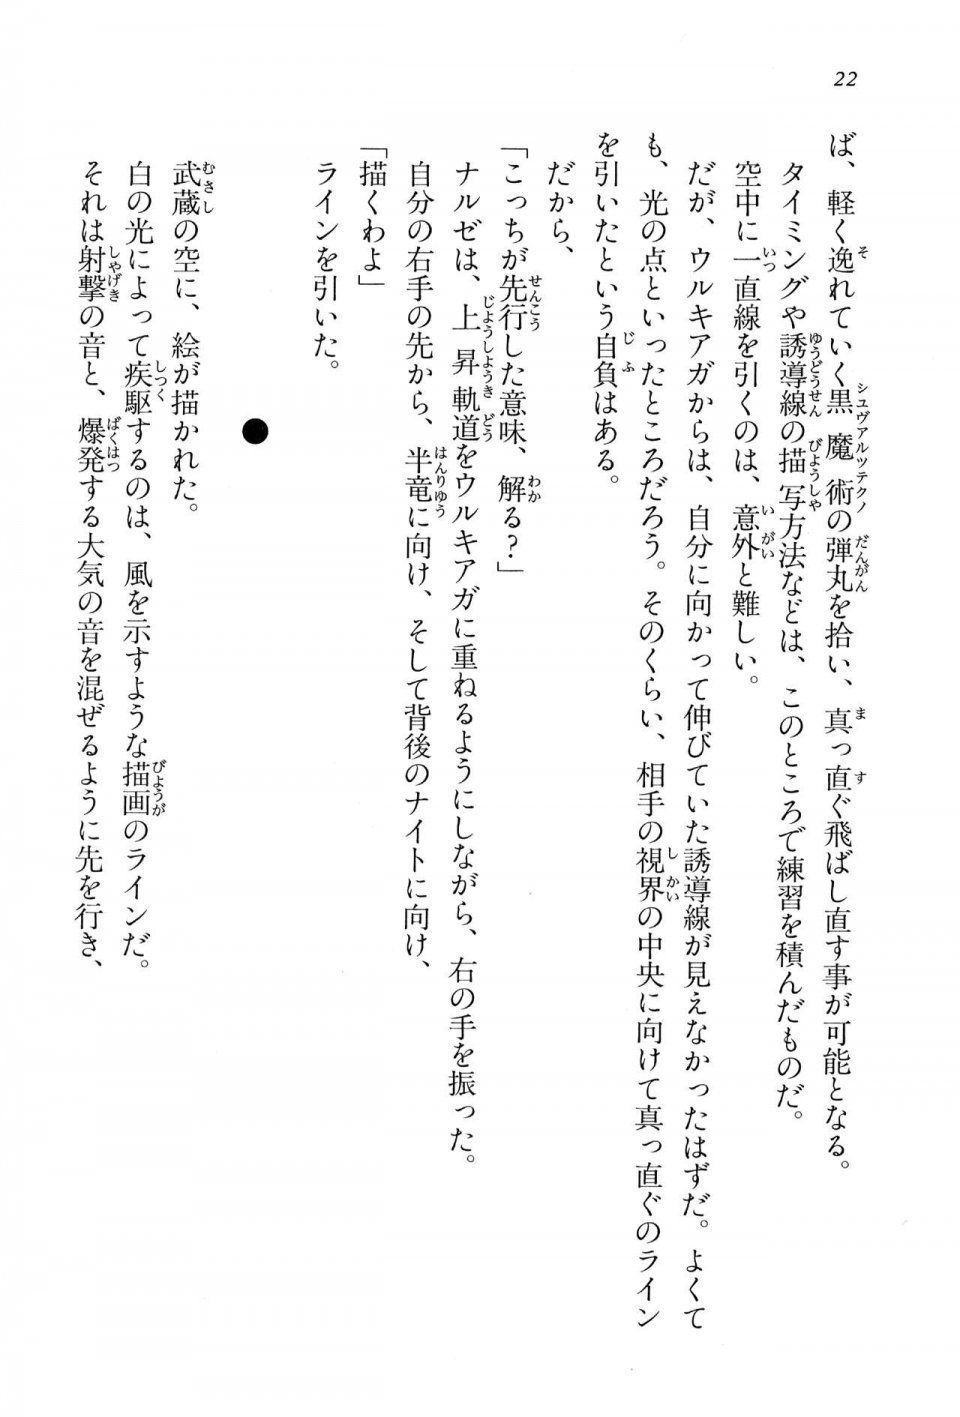 Kyoukai Senjou no Horizon BD Special Mininovel Vol 2(1B) - Photo #26